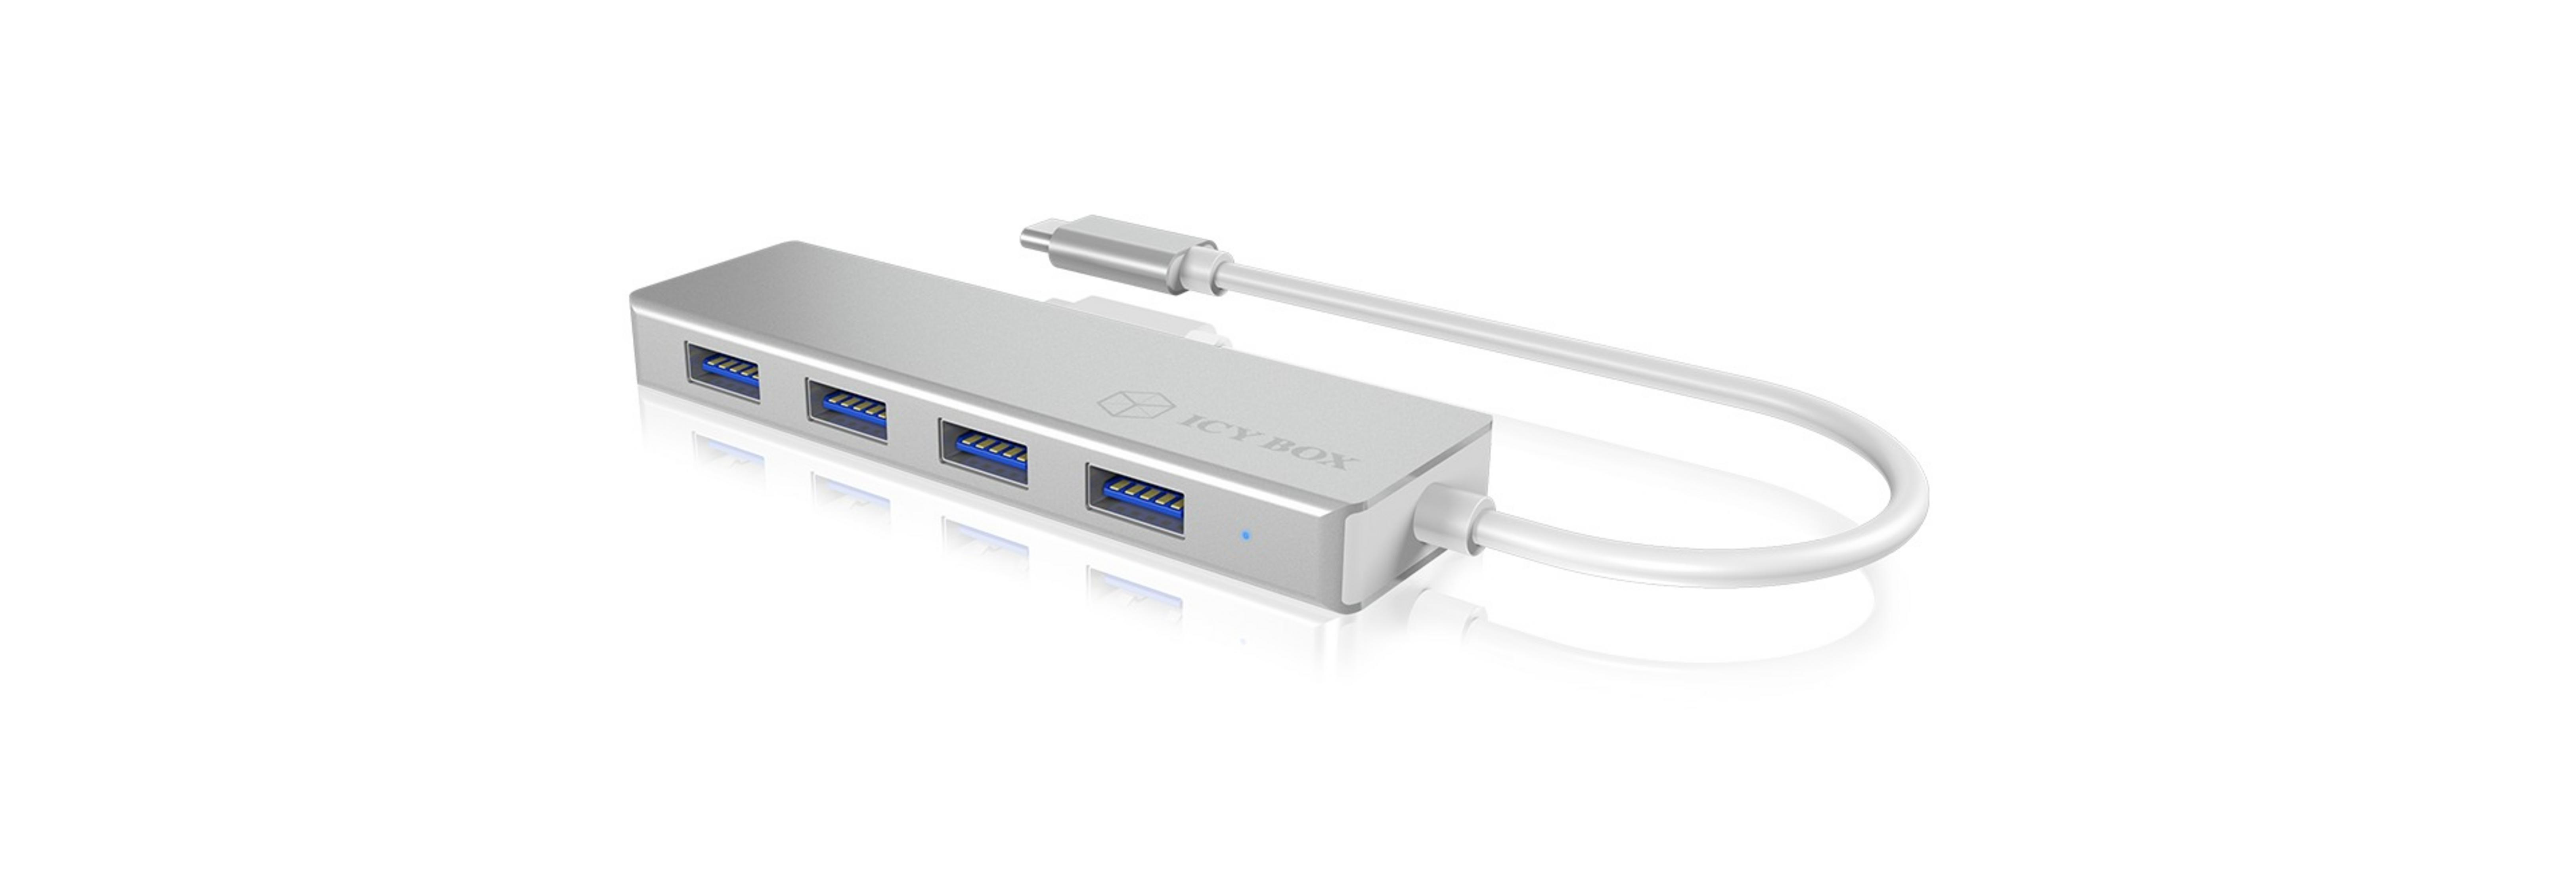 USB Silber Hub, RAIDSONIC Verteiler, IB-HUB1425-C3 USB